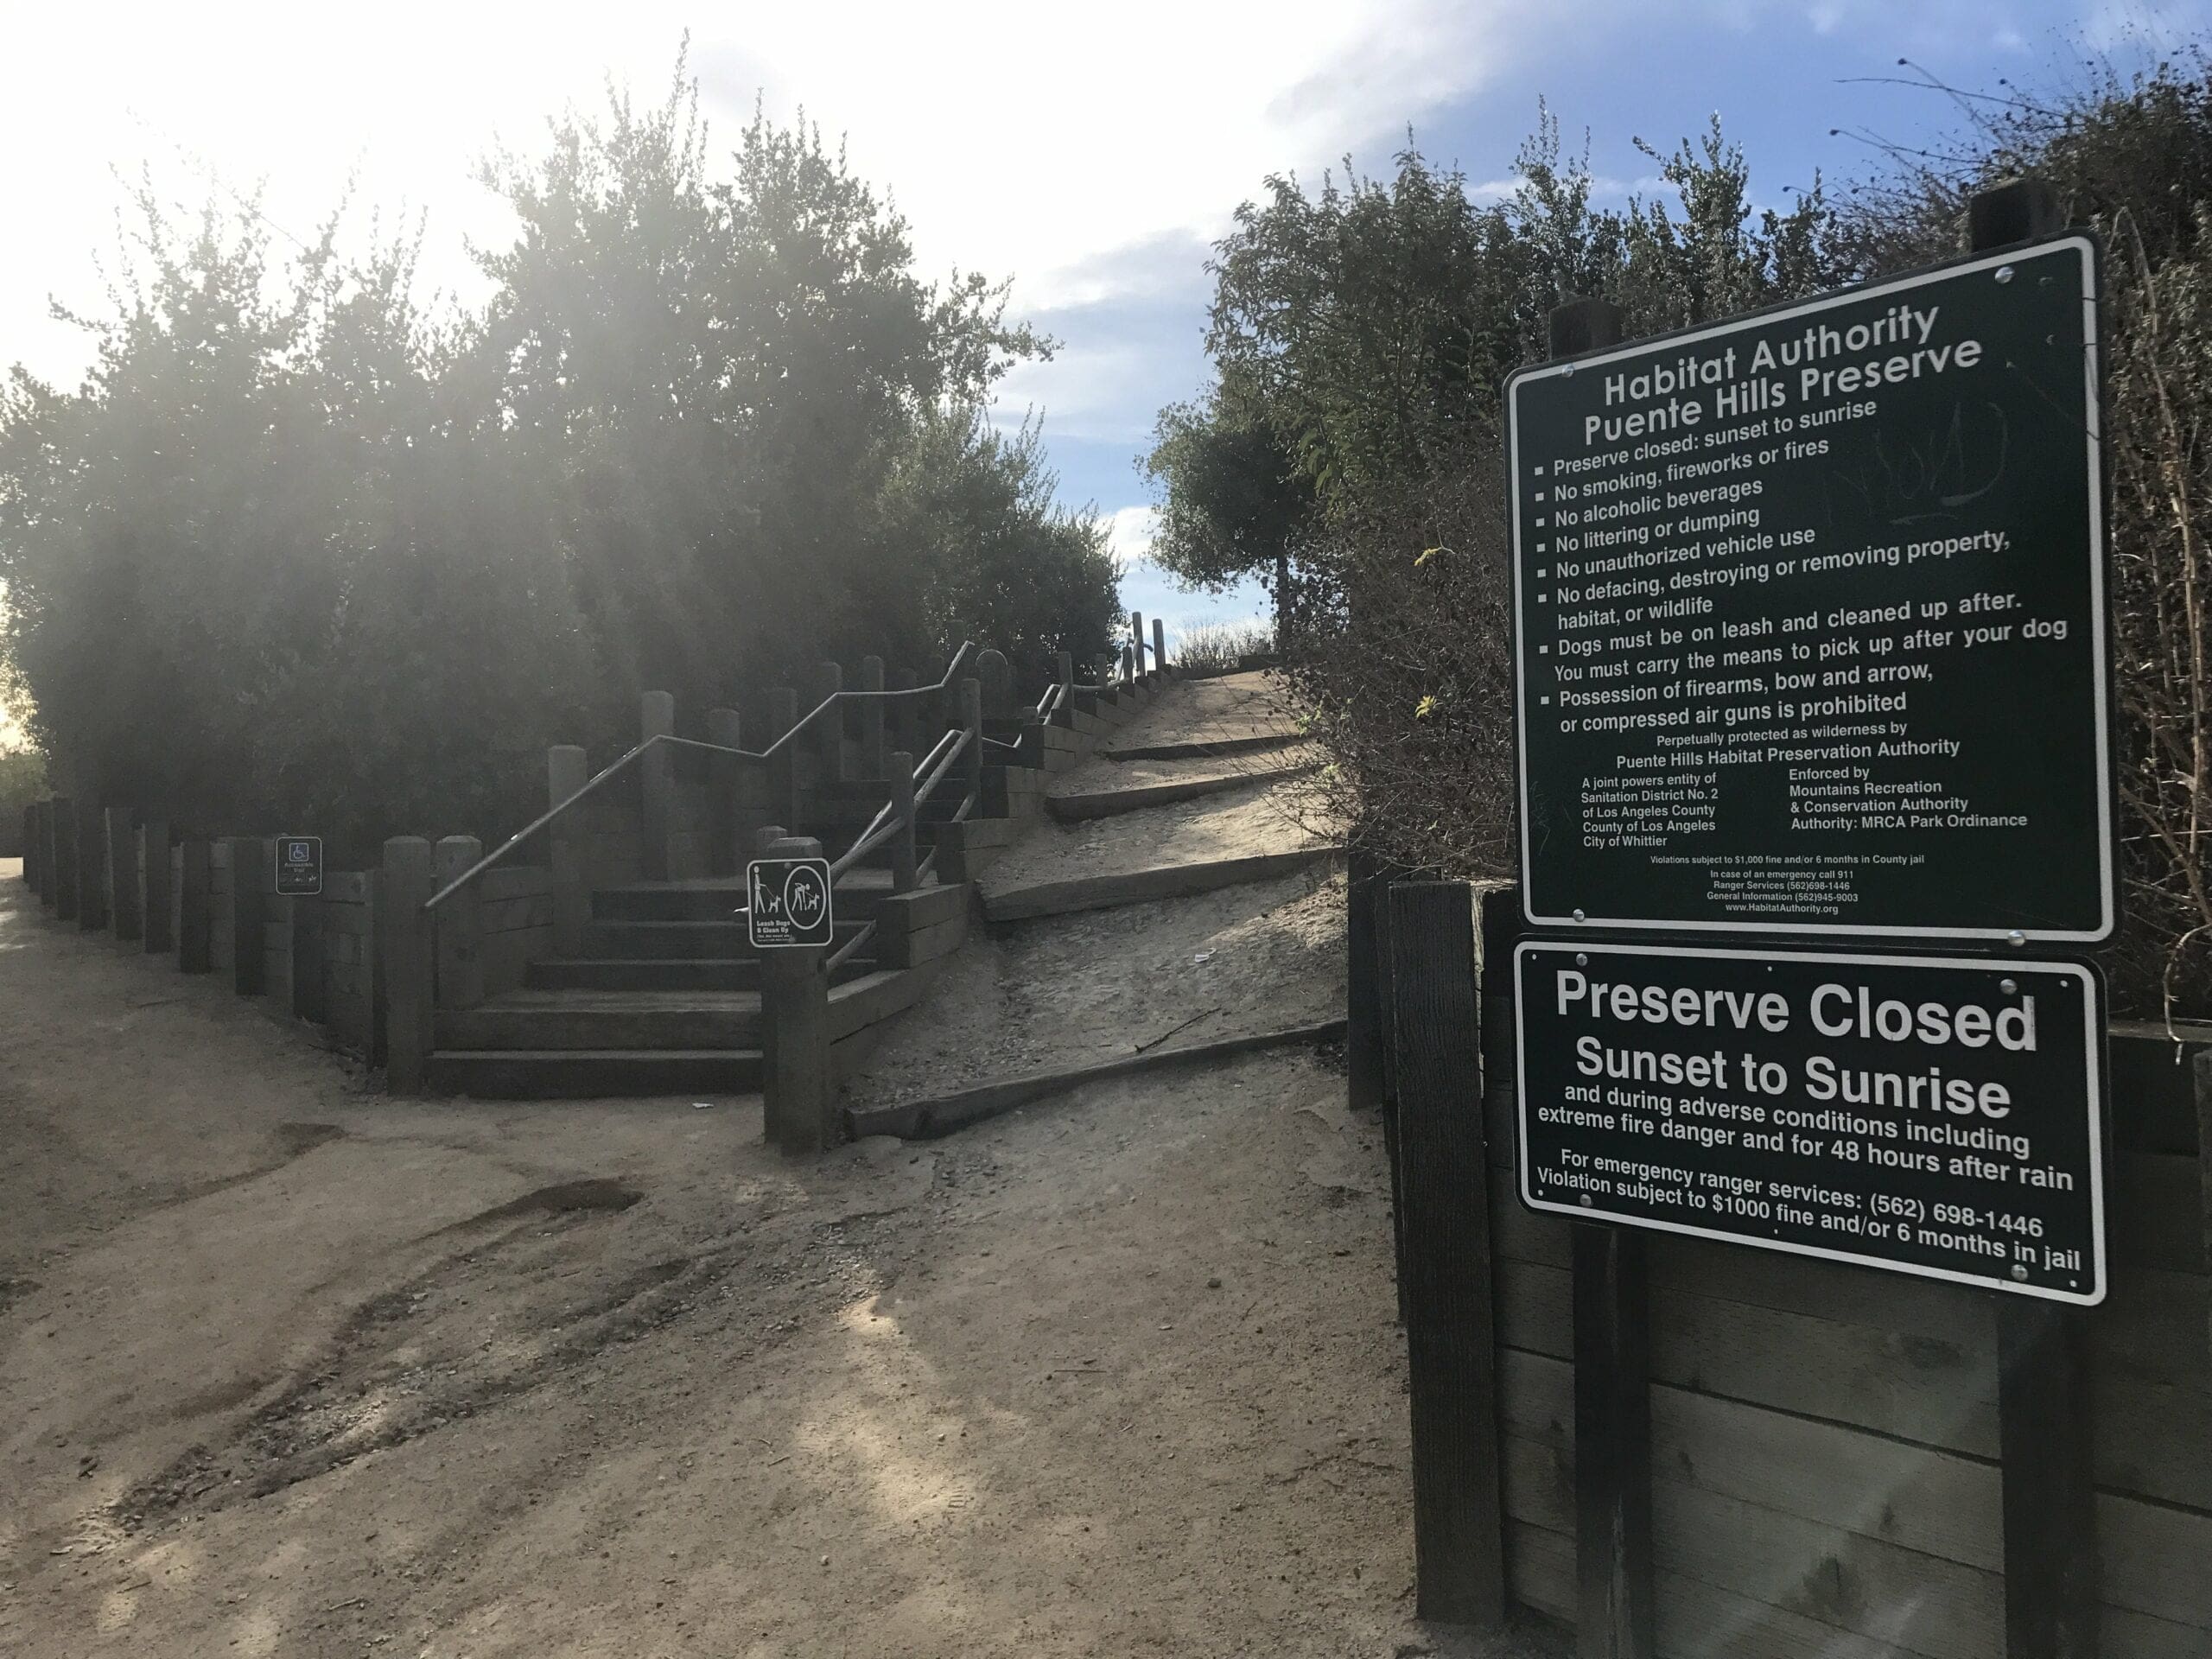 Arroyo Pescadero Trail